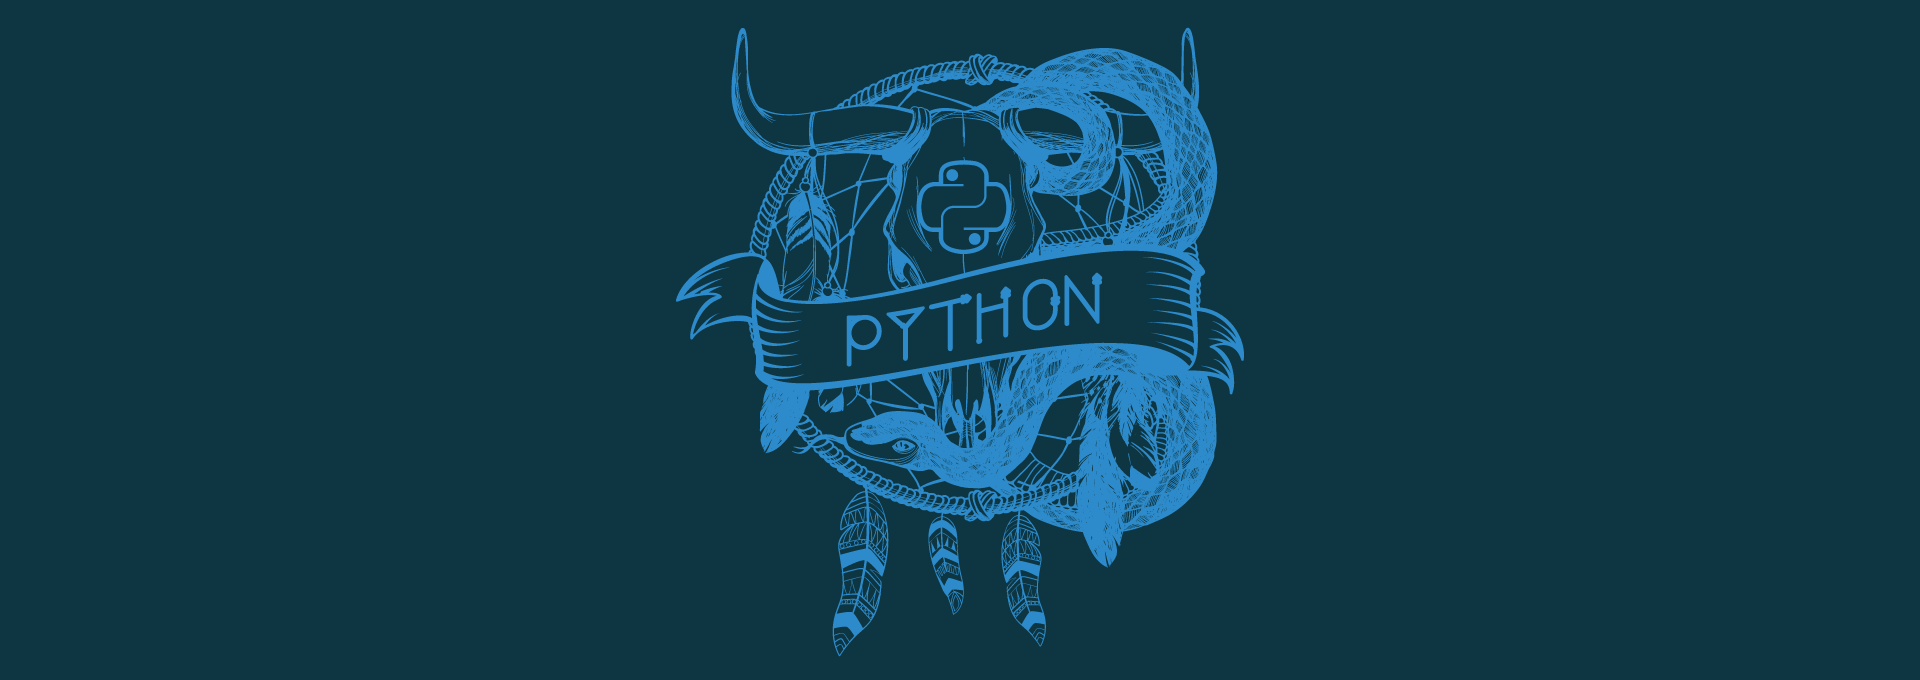 Python master race